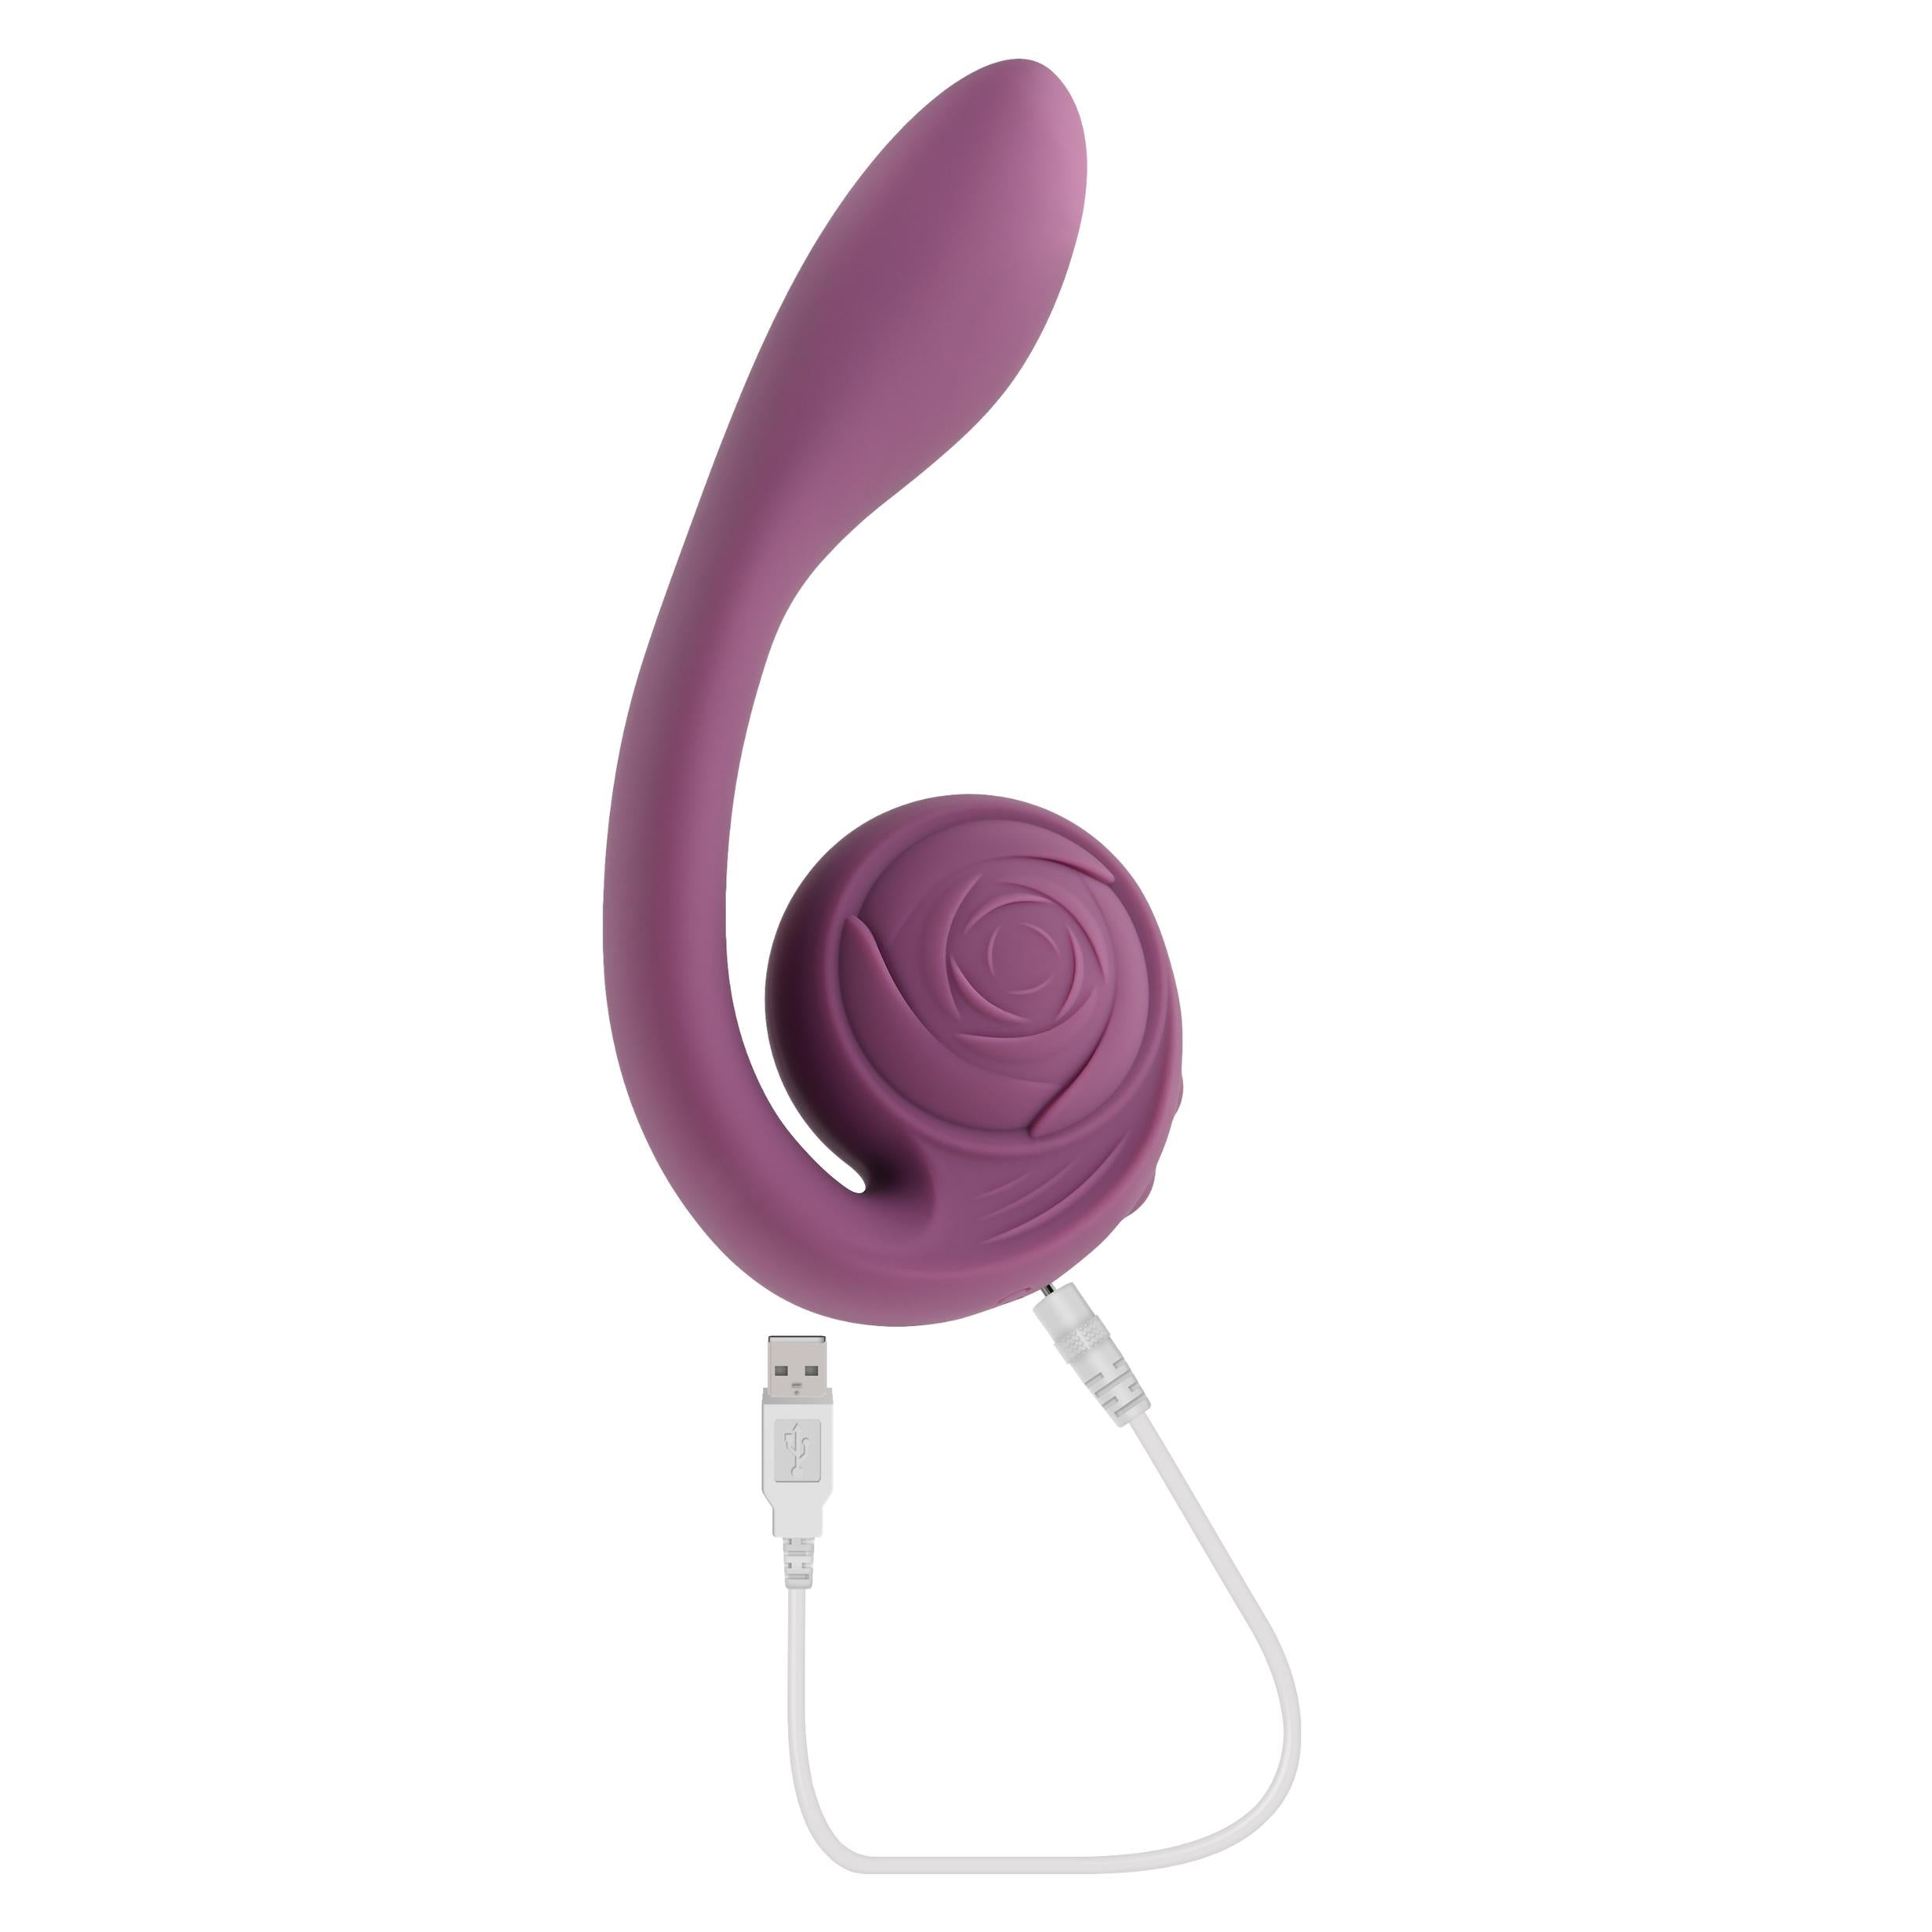 Poseable Rabbit Vibrator - Purple by Evolved